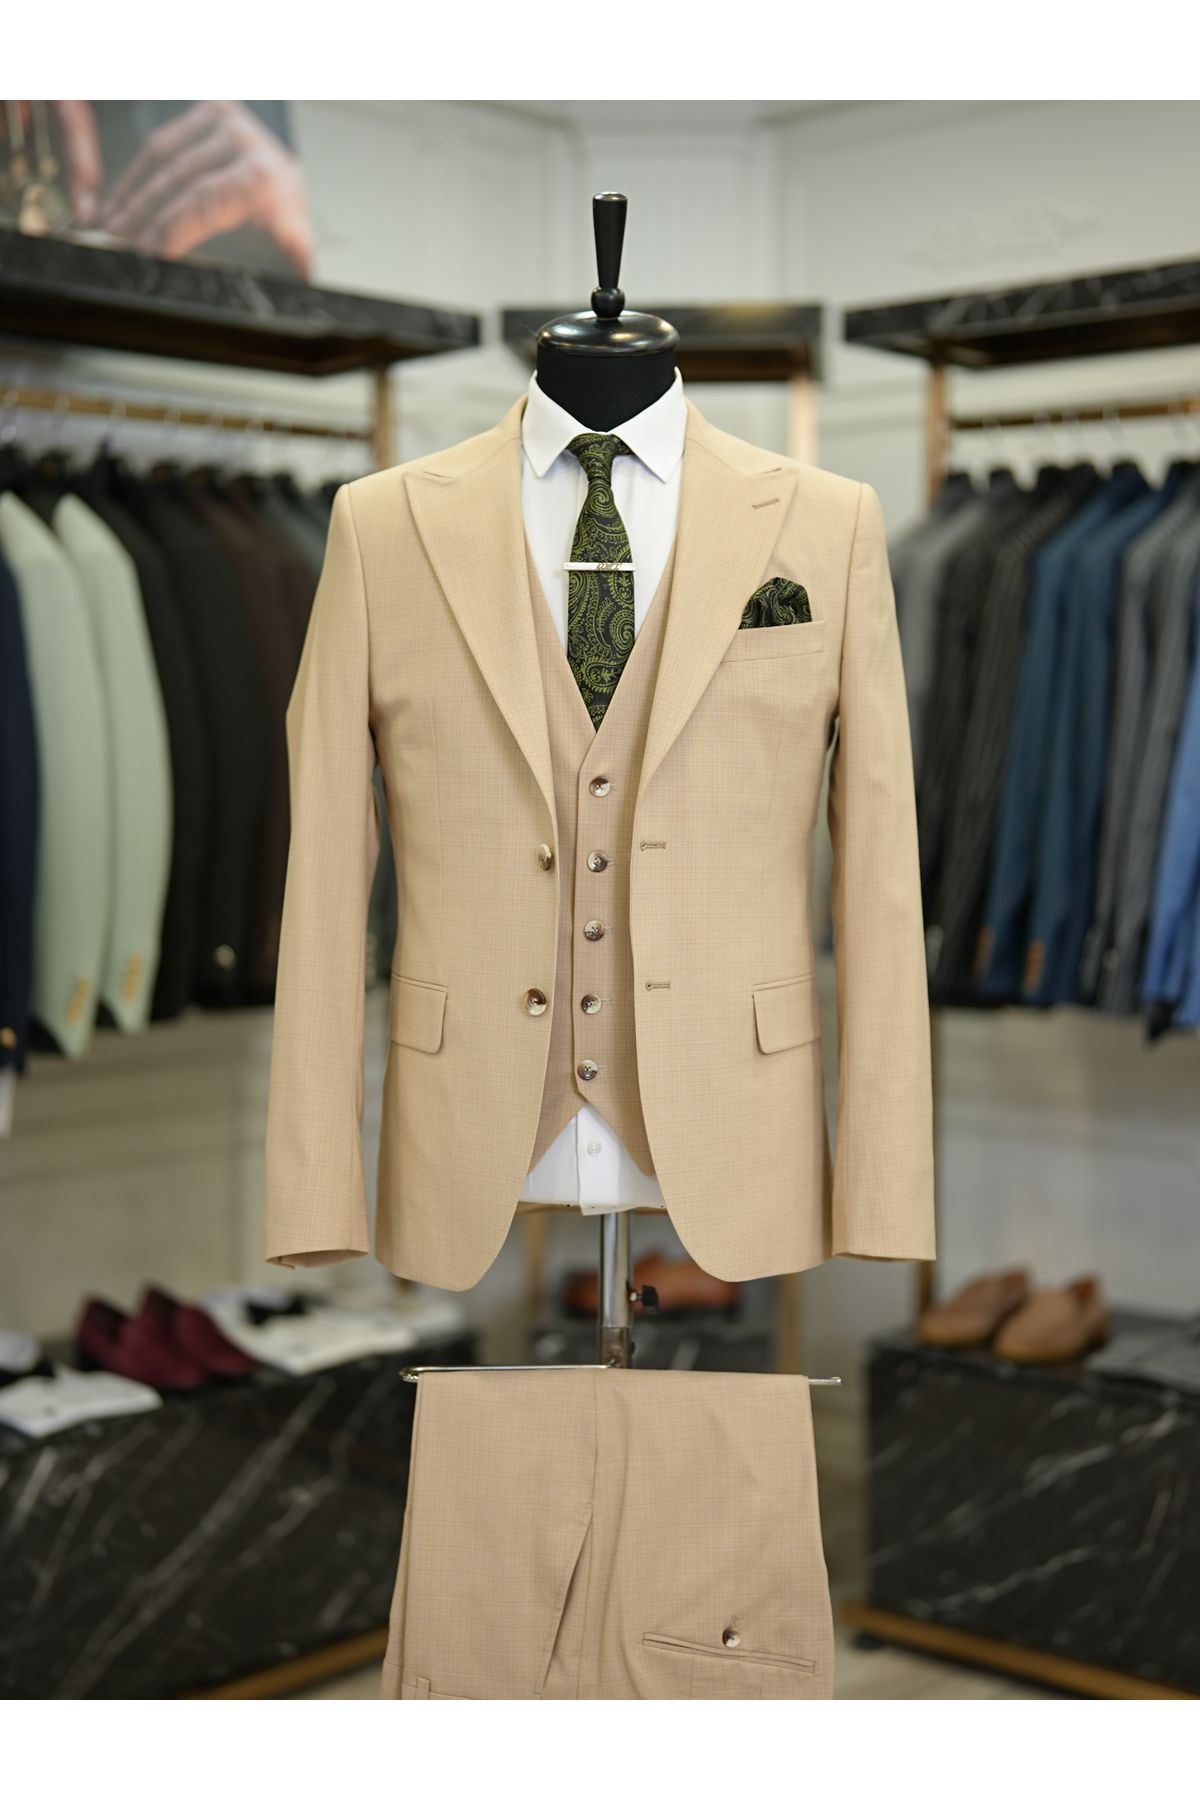 LONATOLİA Erkek Takım Elbise Kırlangıç Yaka İtalyan Stil Slim Fit Ceket Yelek Pantolon